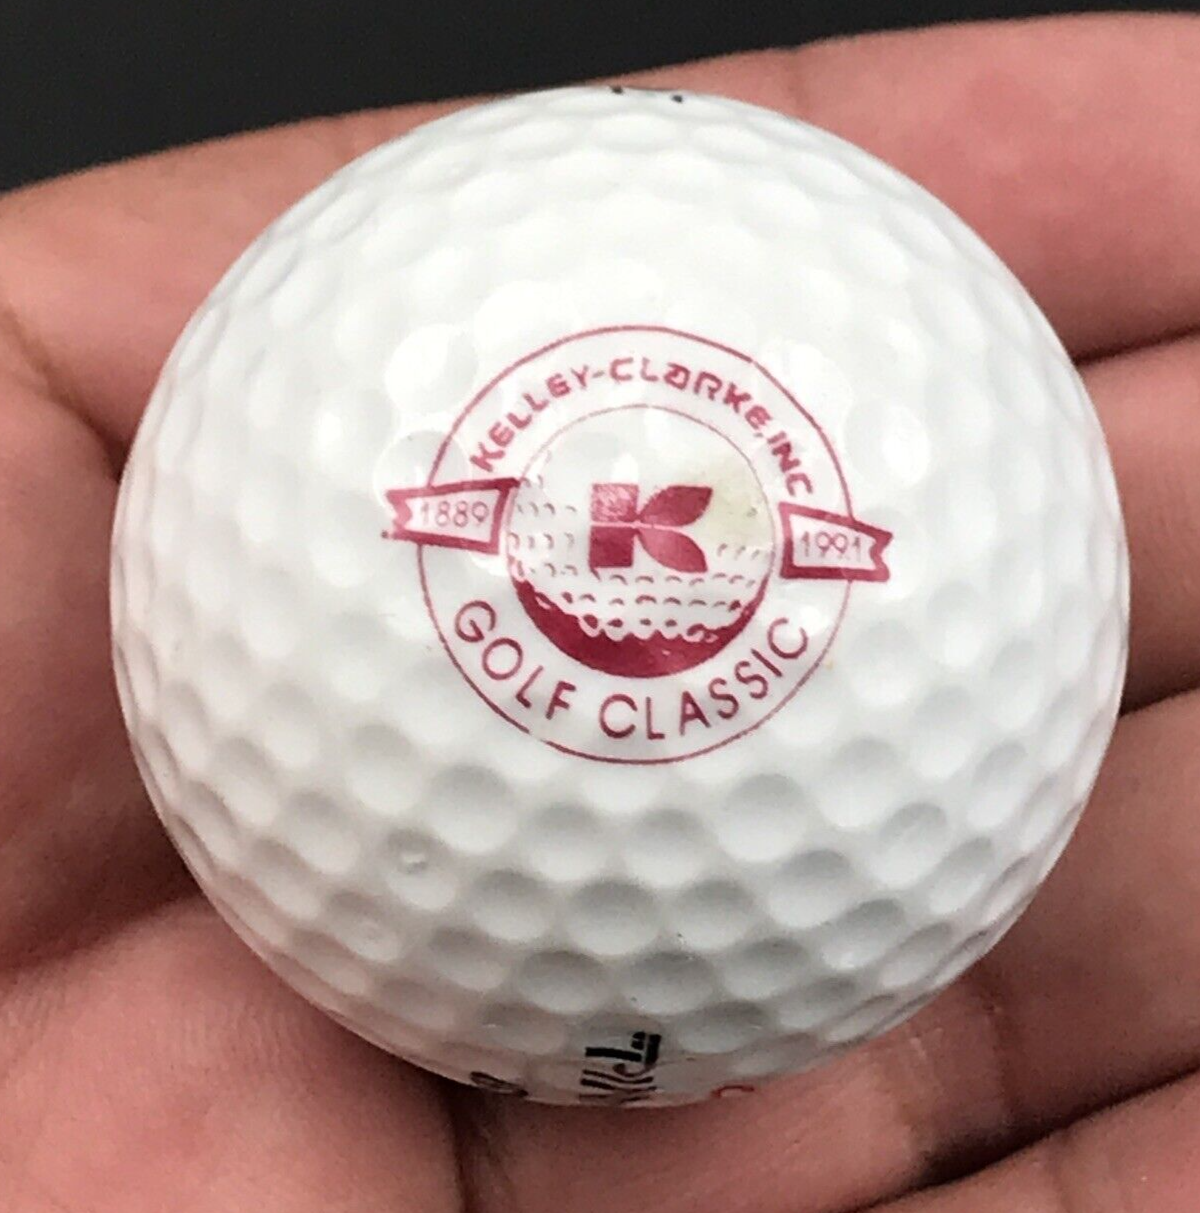 1991 Kelley-Clarke Inc Golf Classic Souvenir Golf Ball Pinnacle Gold - $9.49